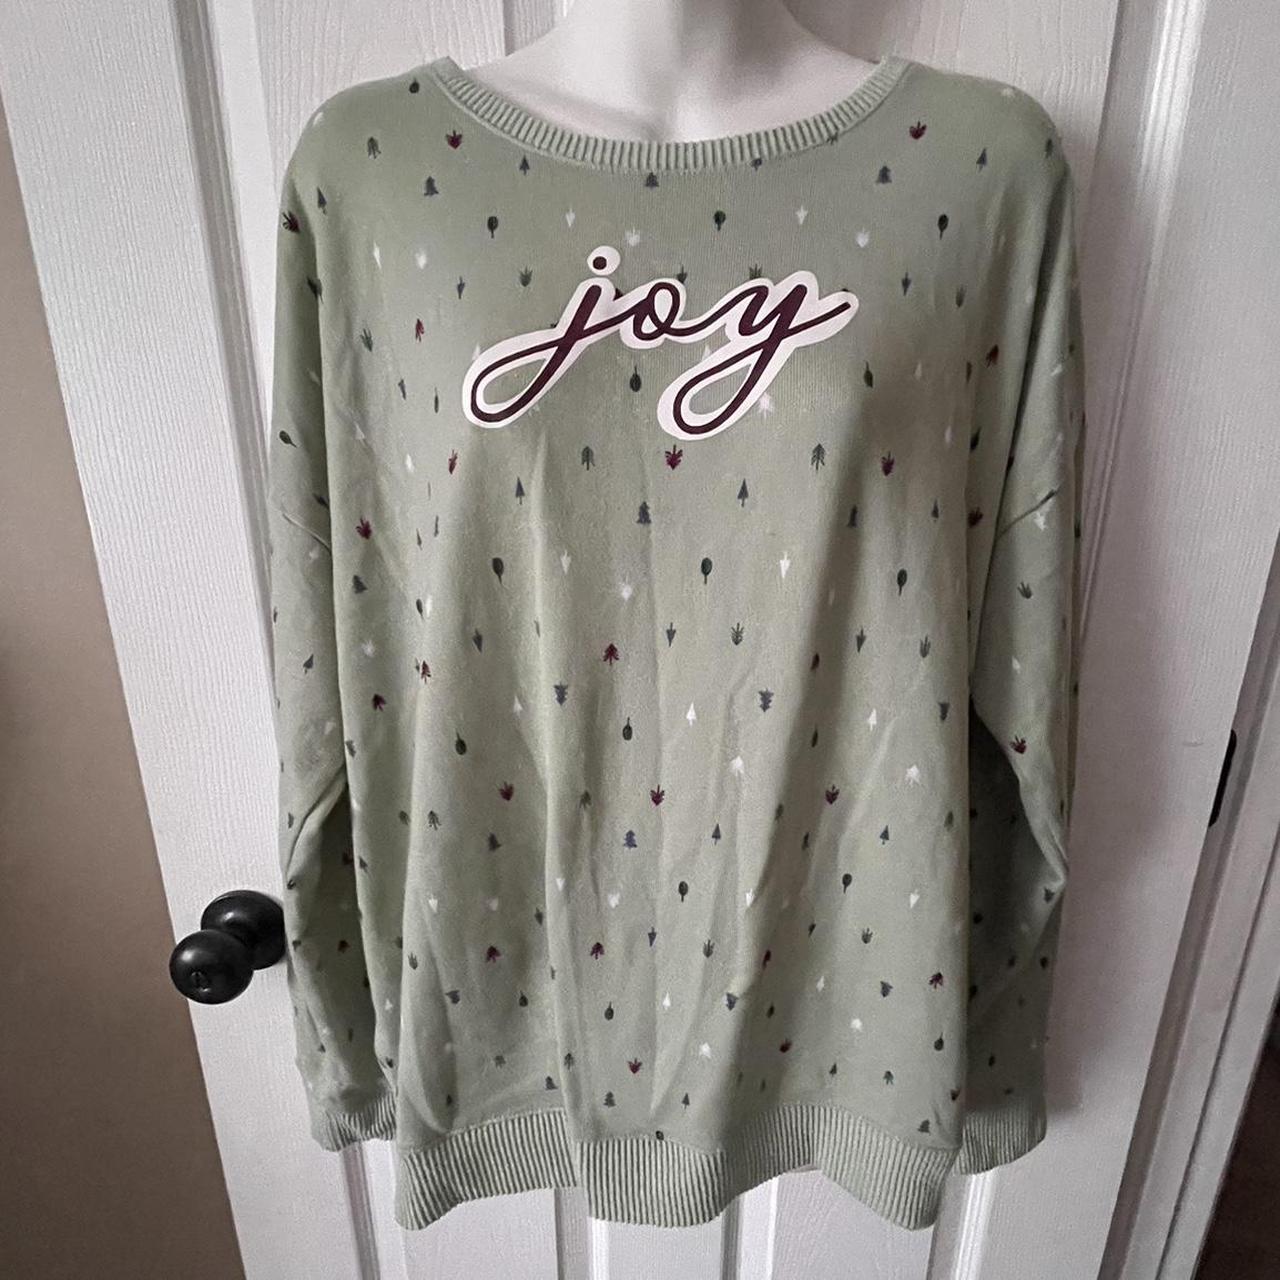 lauren conrad women's intimate JOY shirt size XL